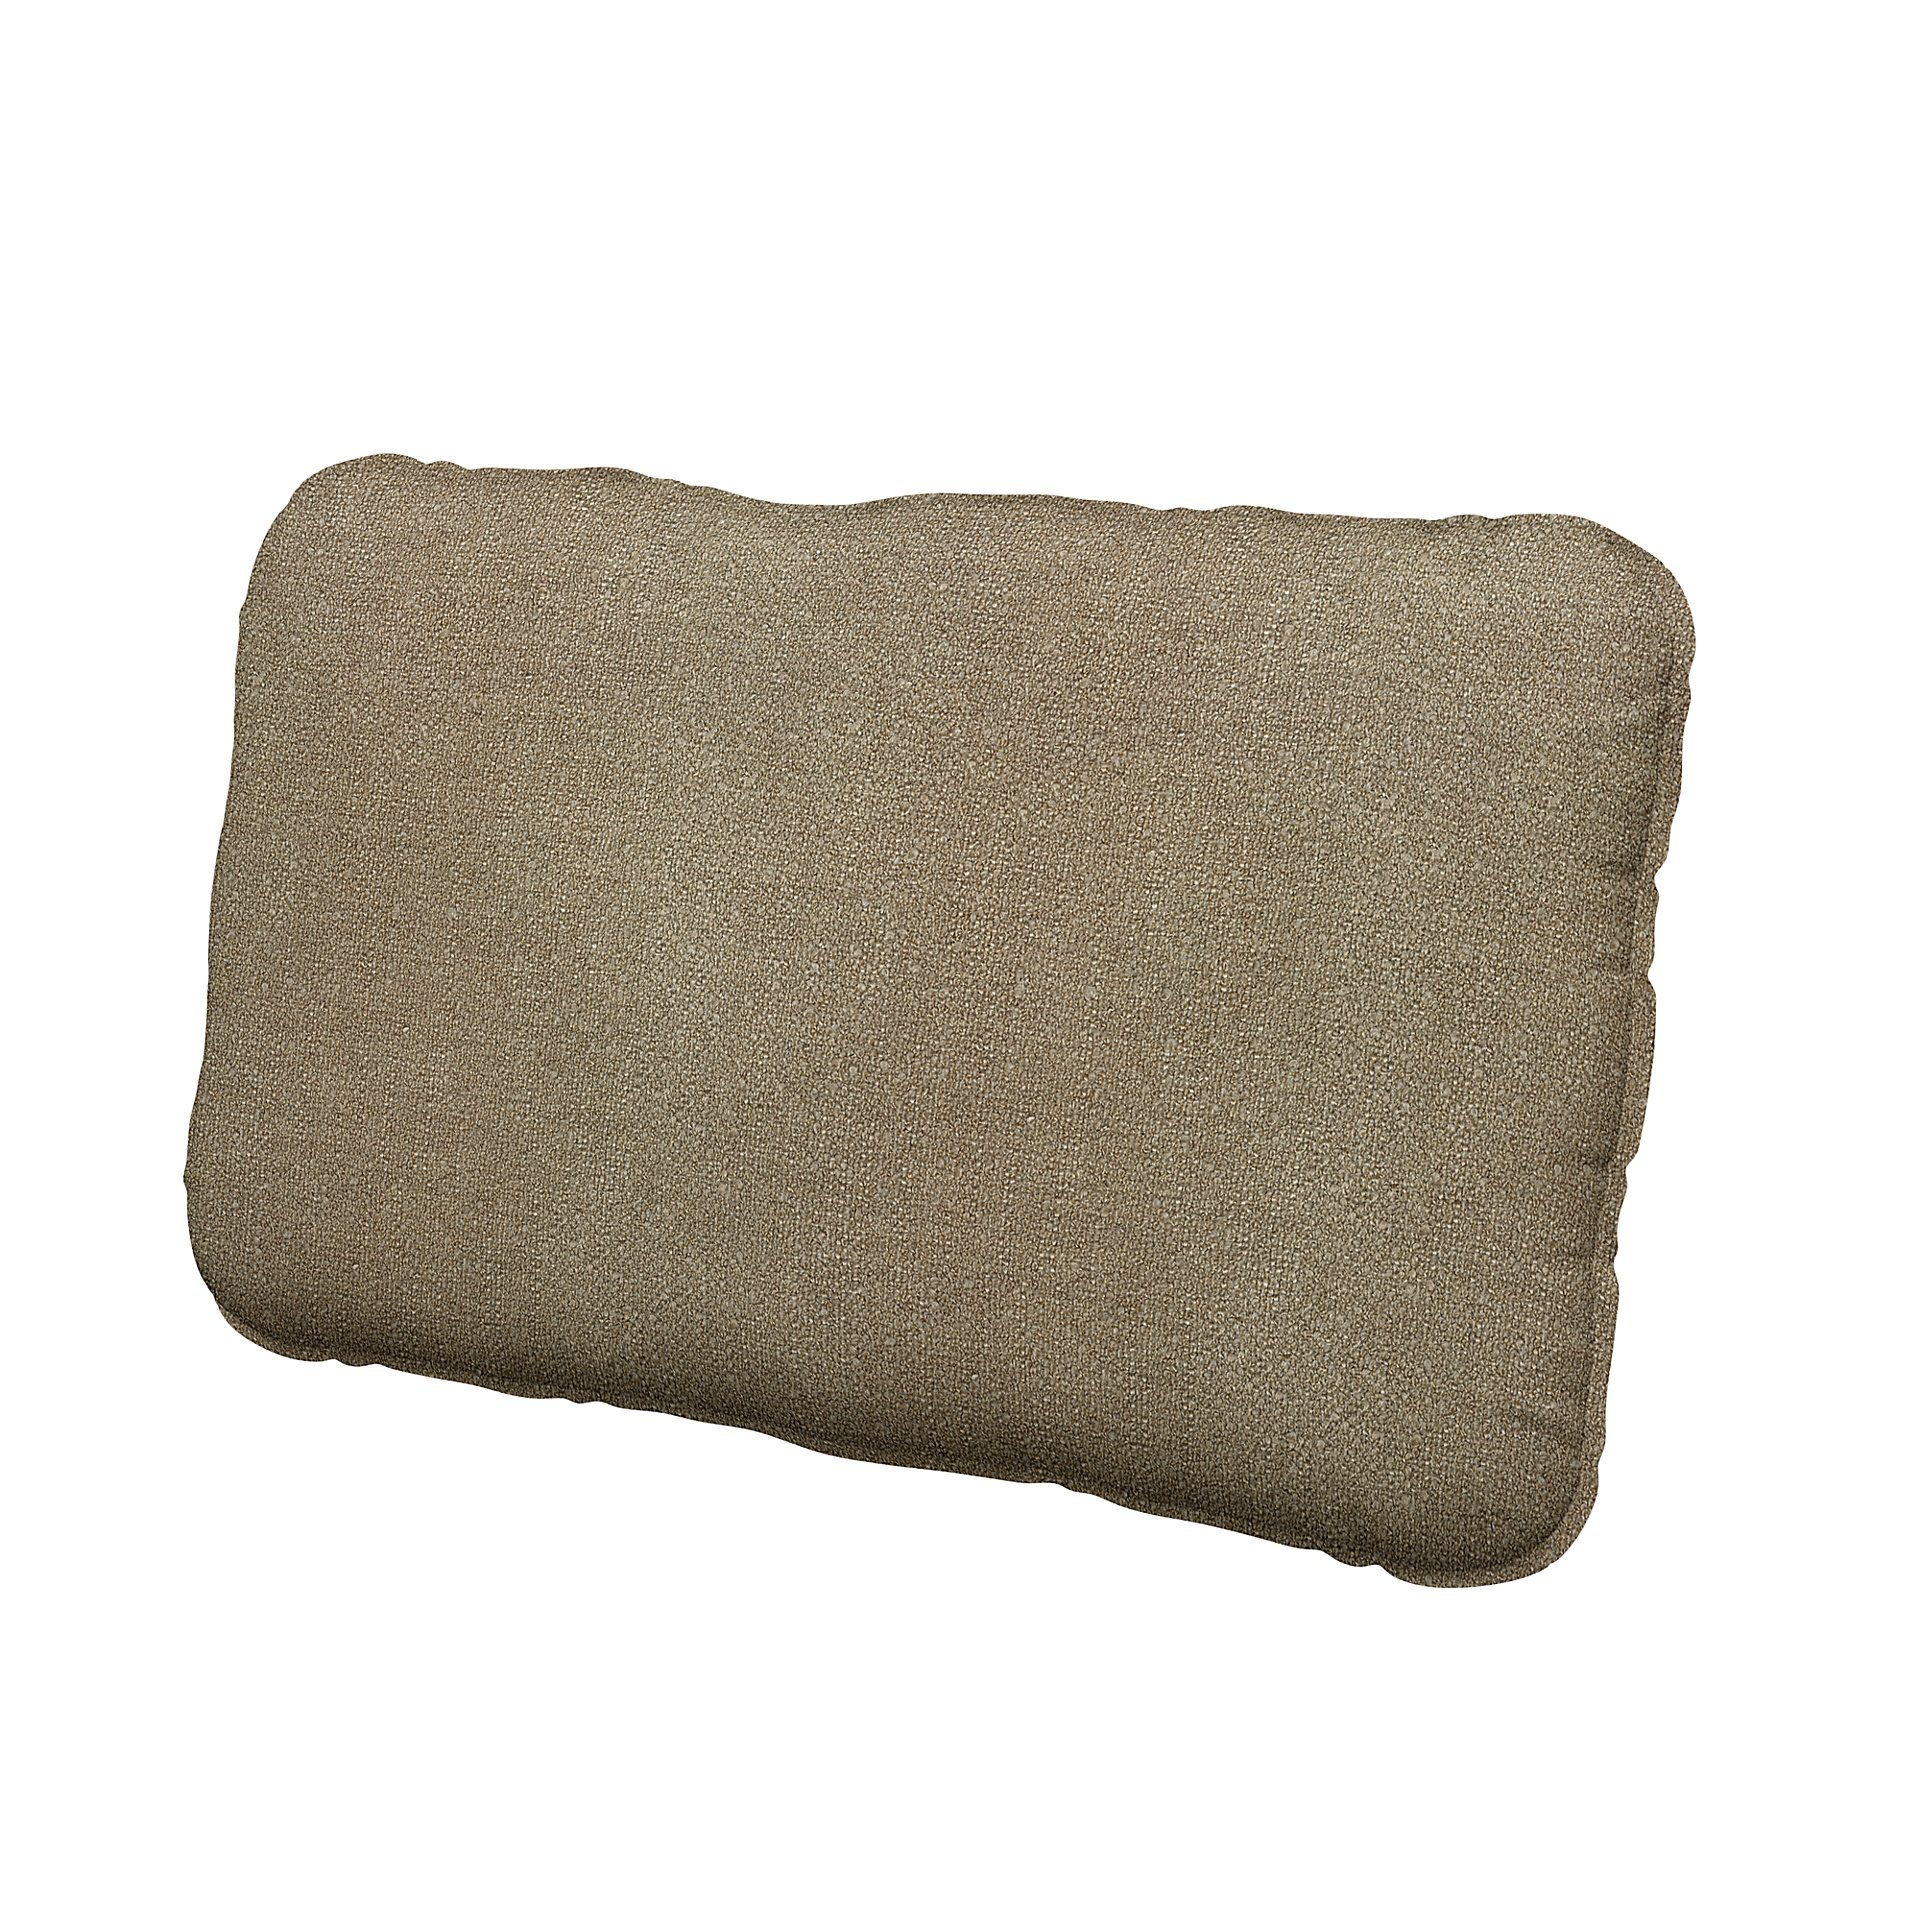 IKEA - Vallentuna back cushion cover 40x75cm, Pebble, Boucle & Texture - Bemz